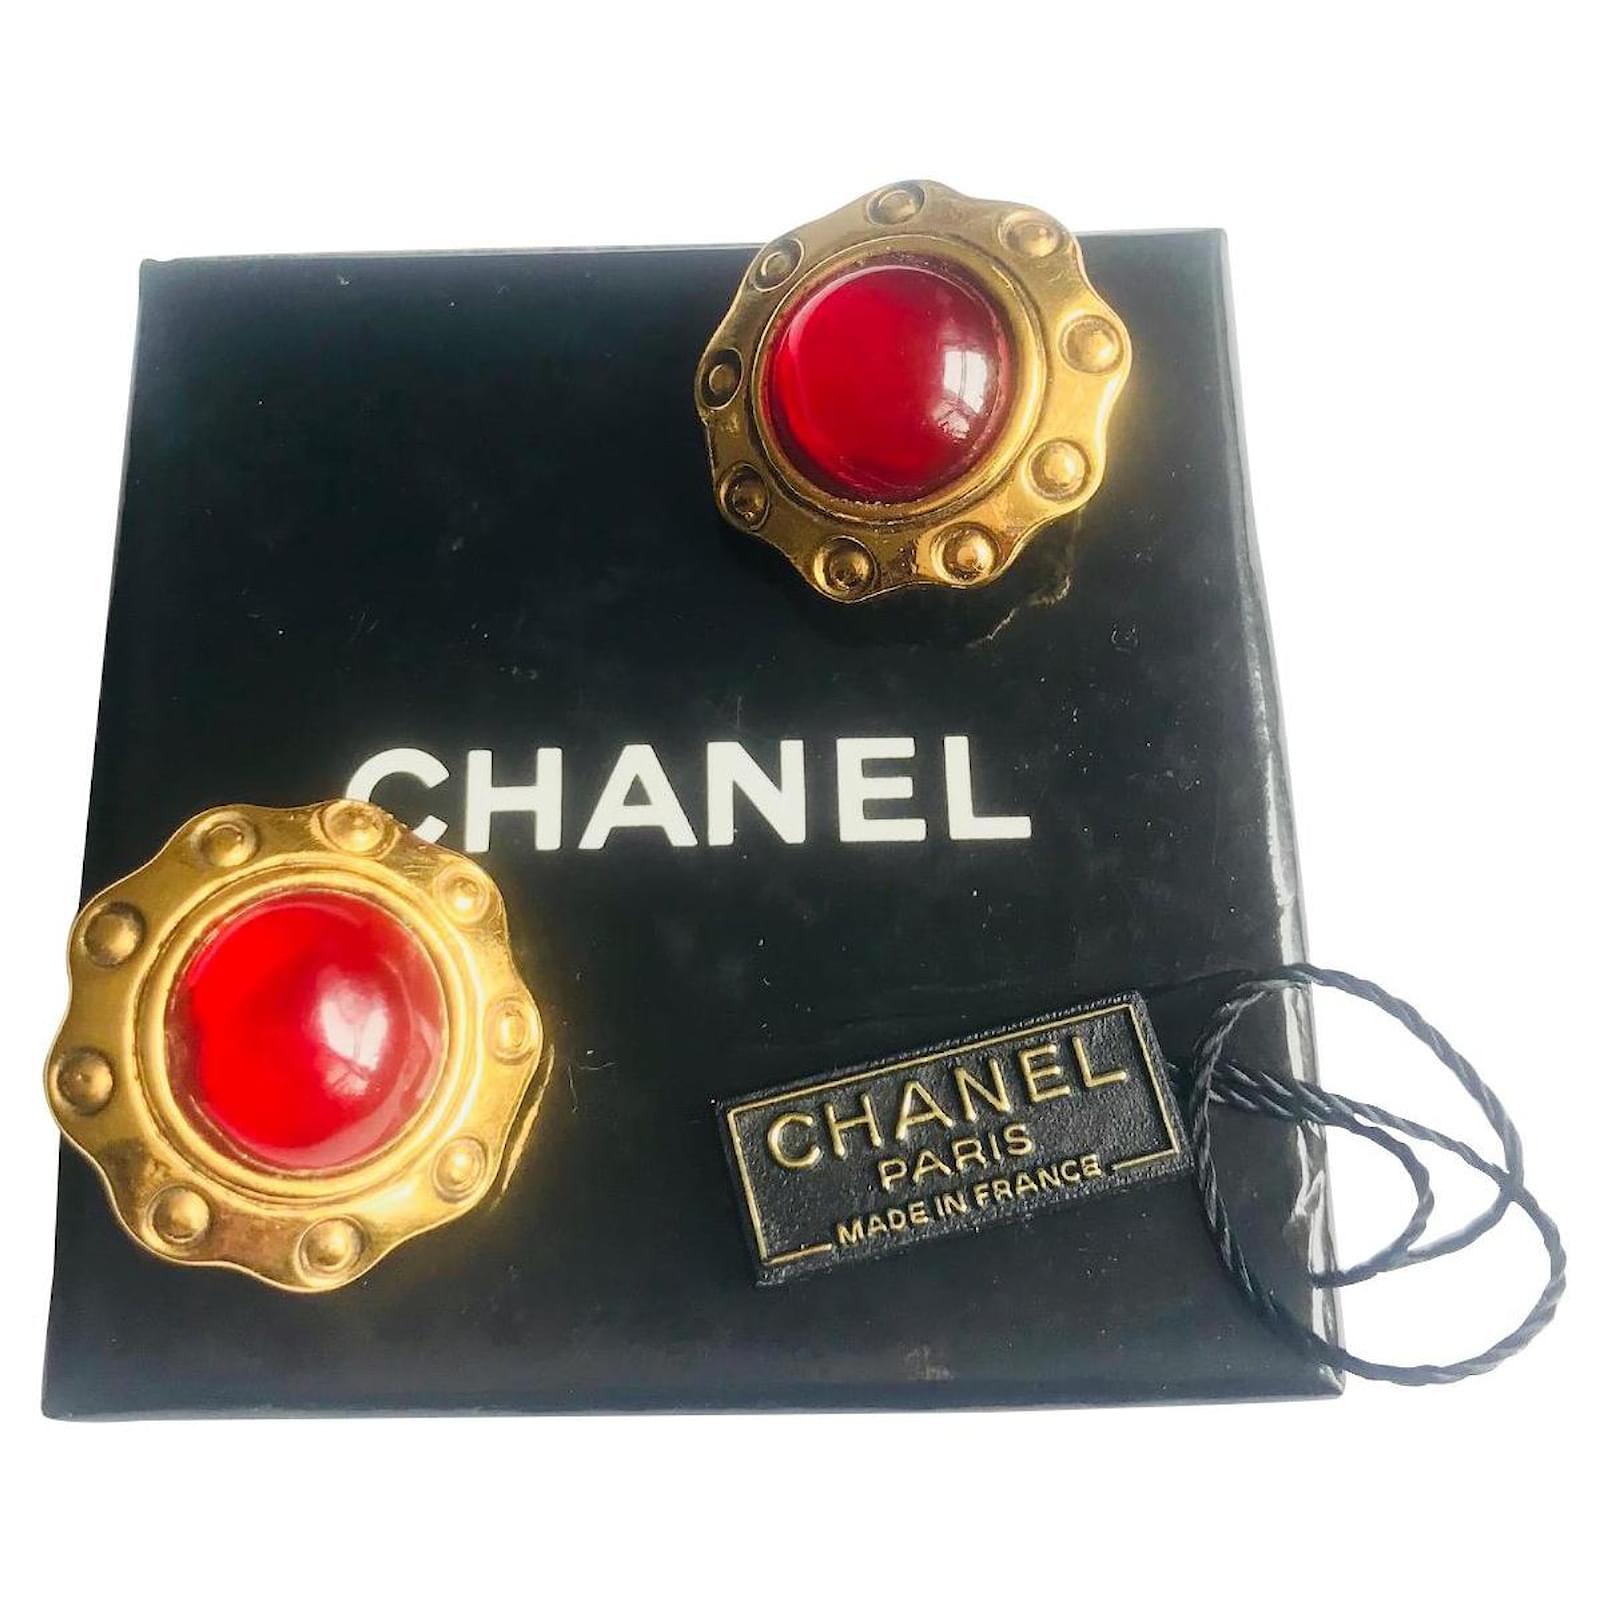 CHANEL GRIPOIX JEWELLERY  Chanel jewelry, Vintage chanel, Paris